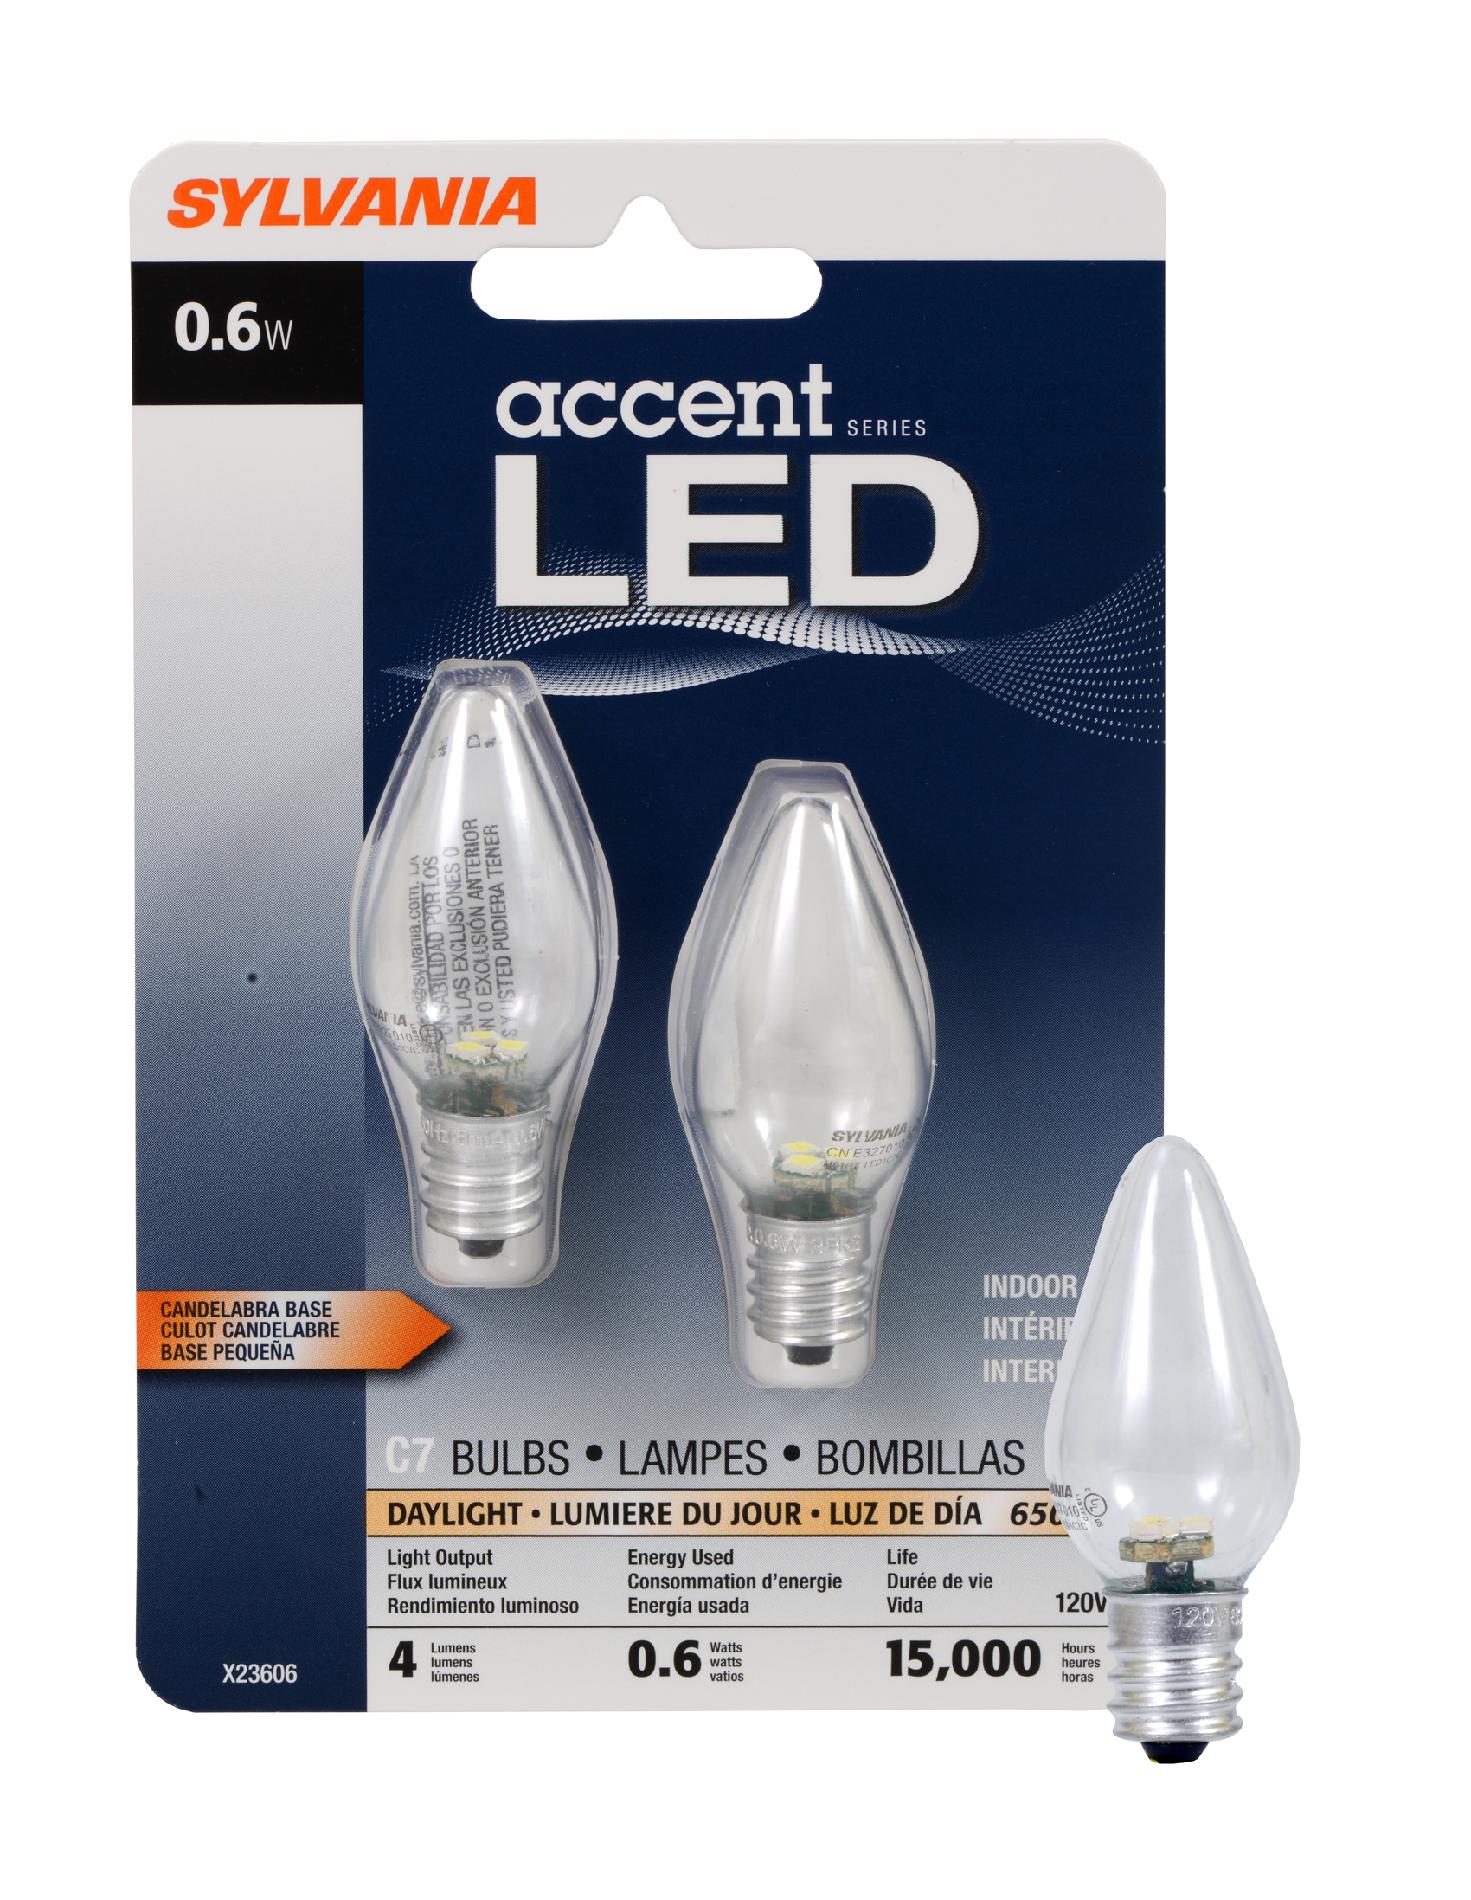 Sylvania LED Accent Daylight Bulb C7-Candelabra Base 120V Light Bulb 0.6W Equivalent 25W - 2 Pack